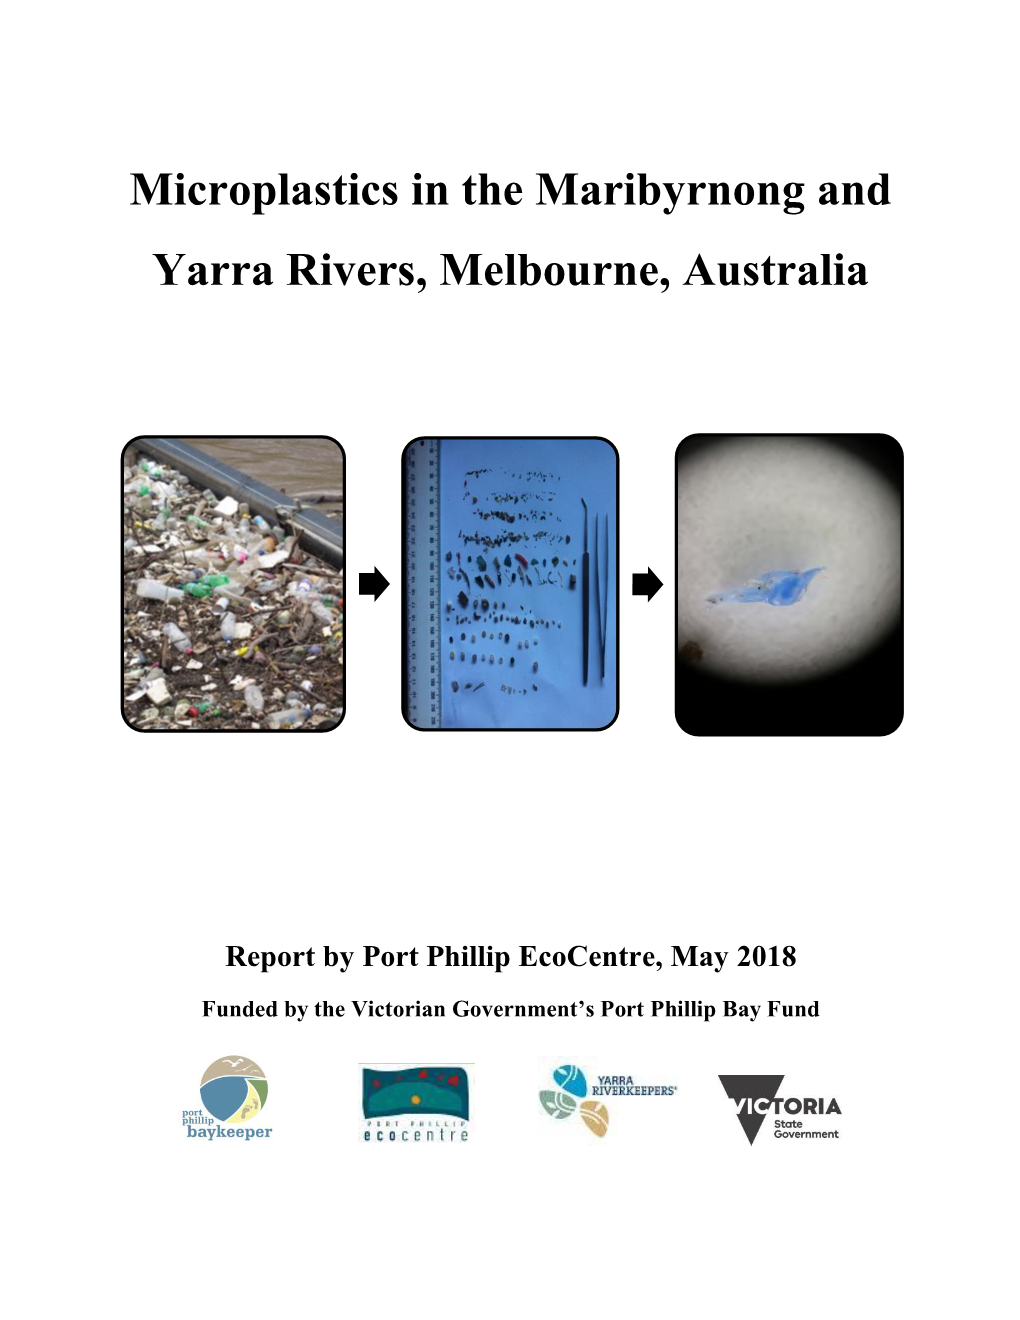 Microplastics in the Maribyrnong and Yarra Rivers, Melbourne, Australia